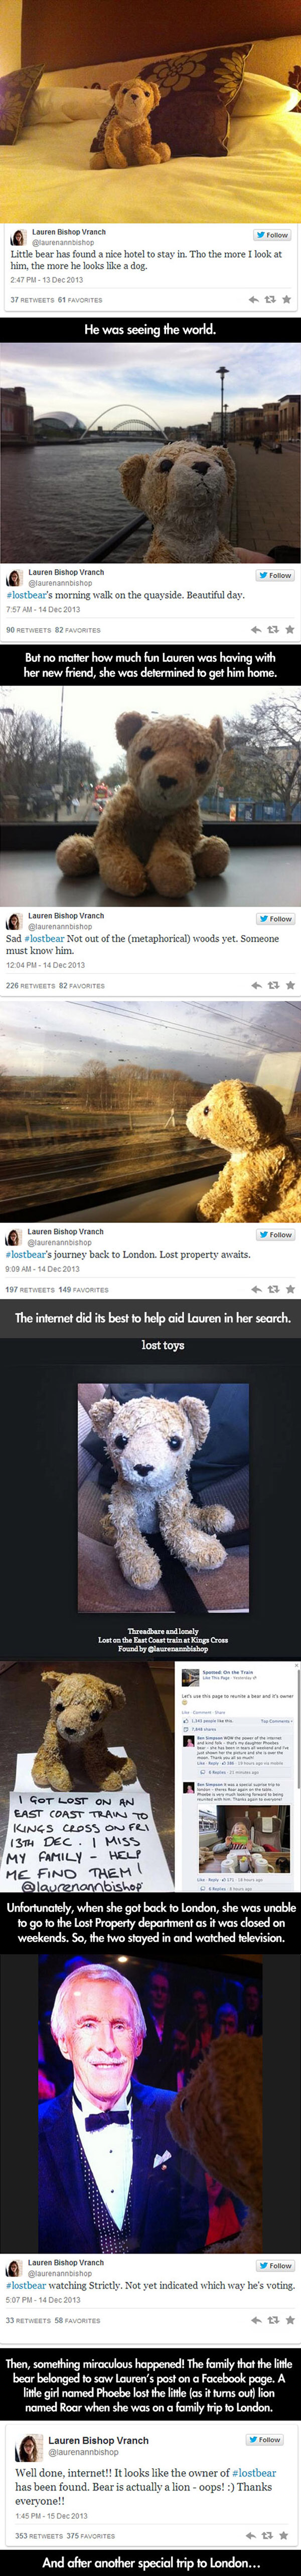 little girl loses bear